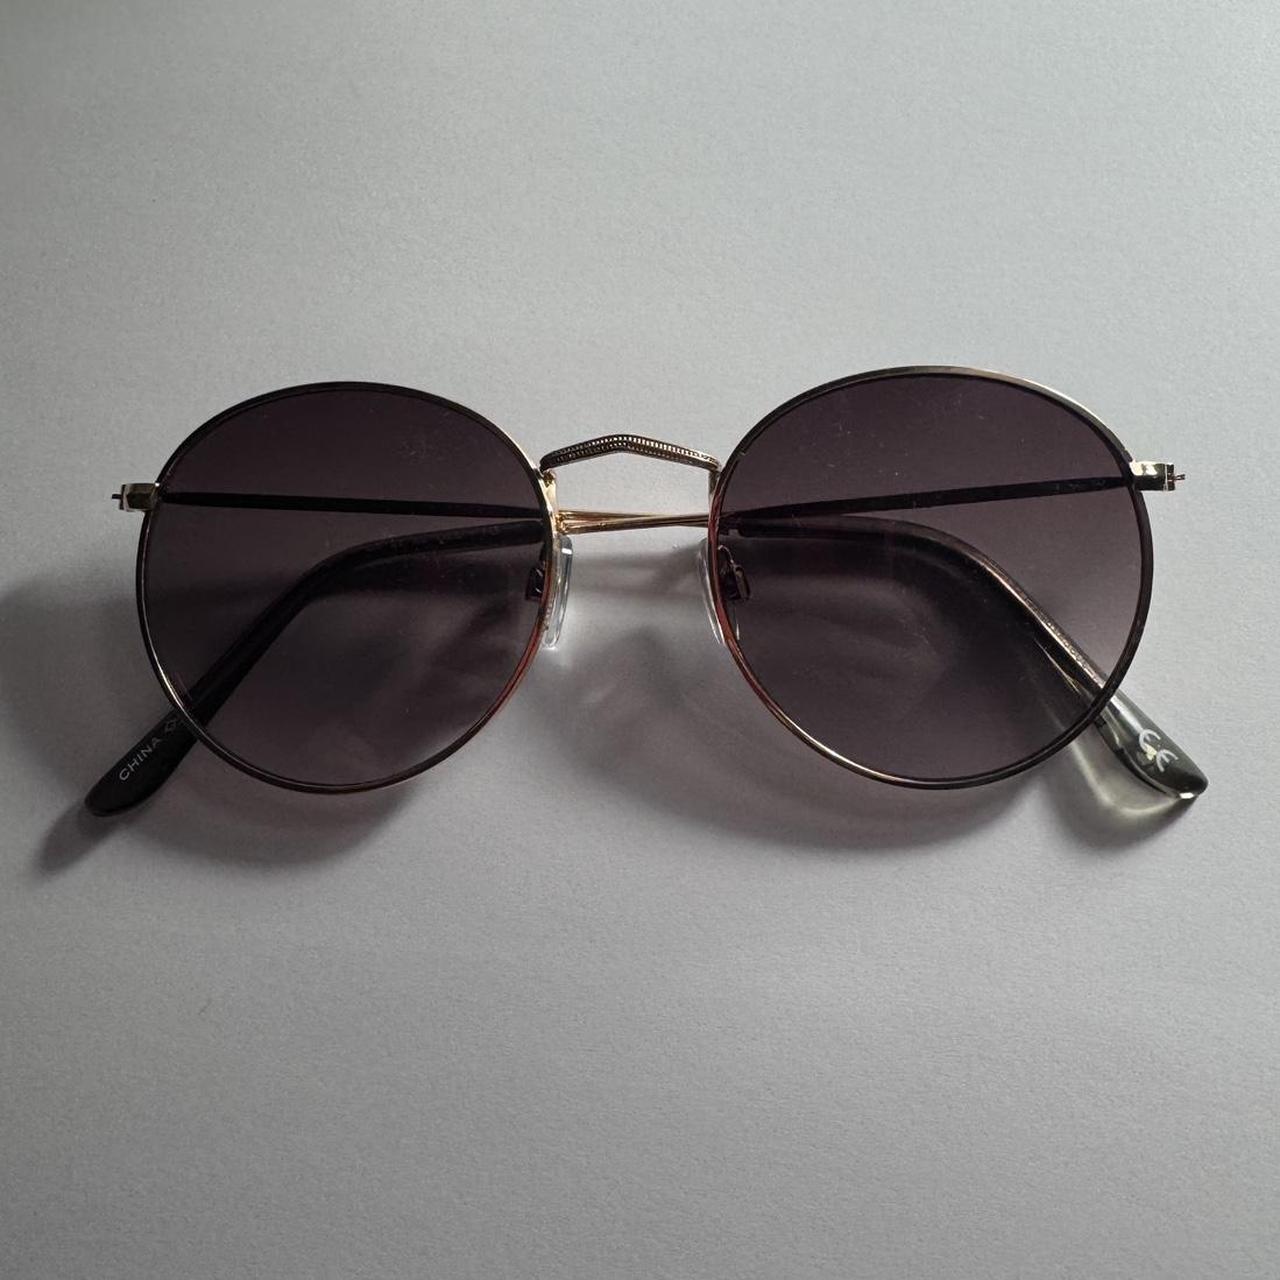 simple sunglasses - Depop